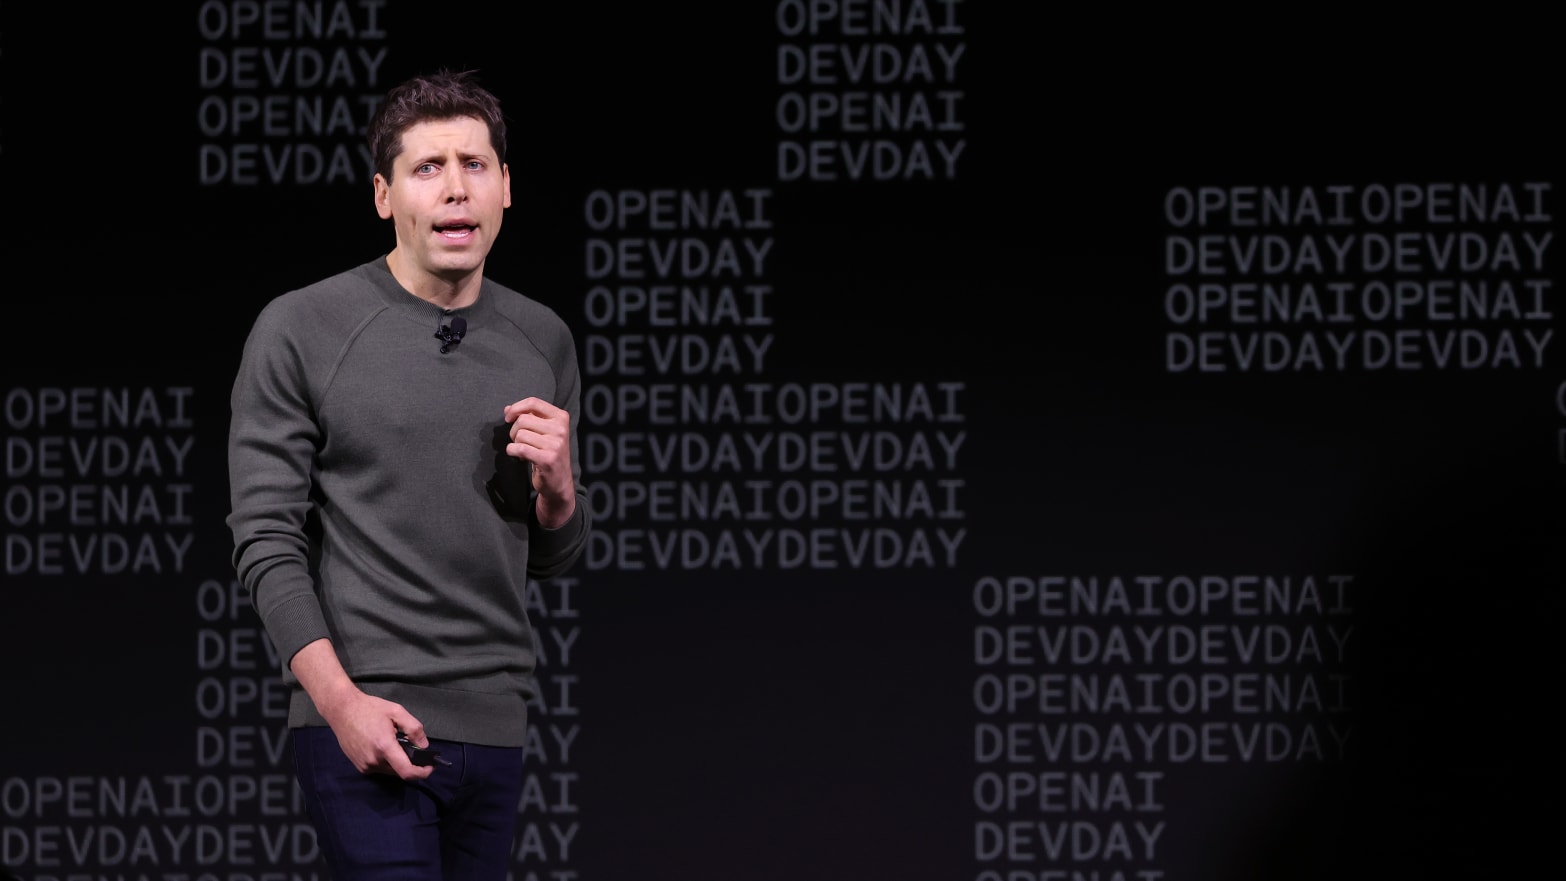 OpenAI CEO Sam Altman speaks during the OpenAI DevDay event on November 06, 2023 in San Francisco, California.